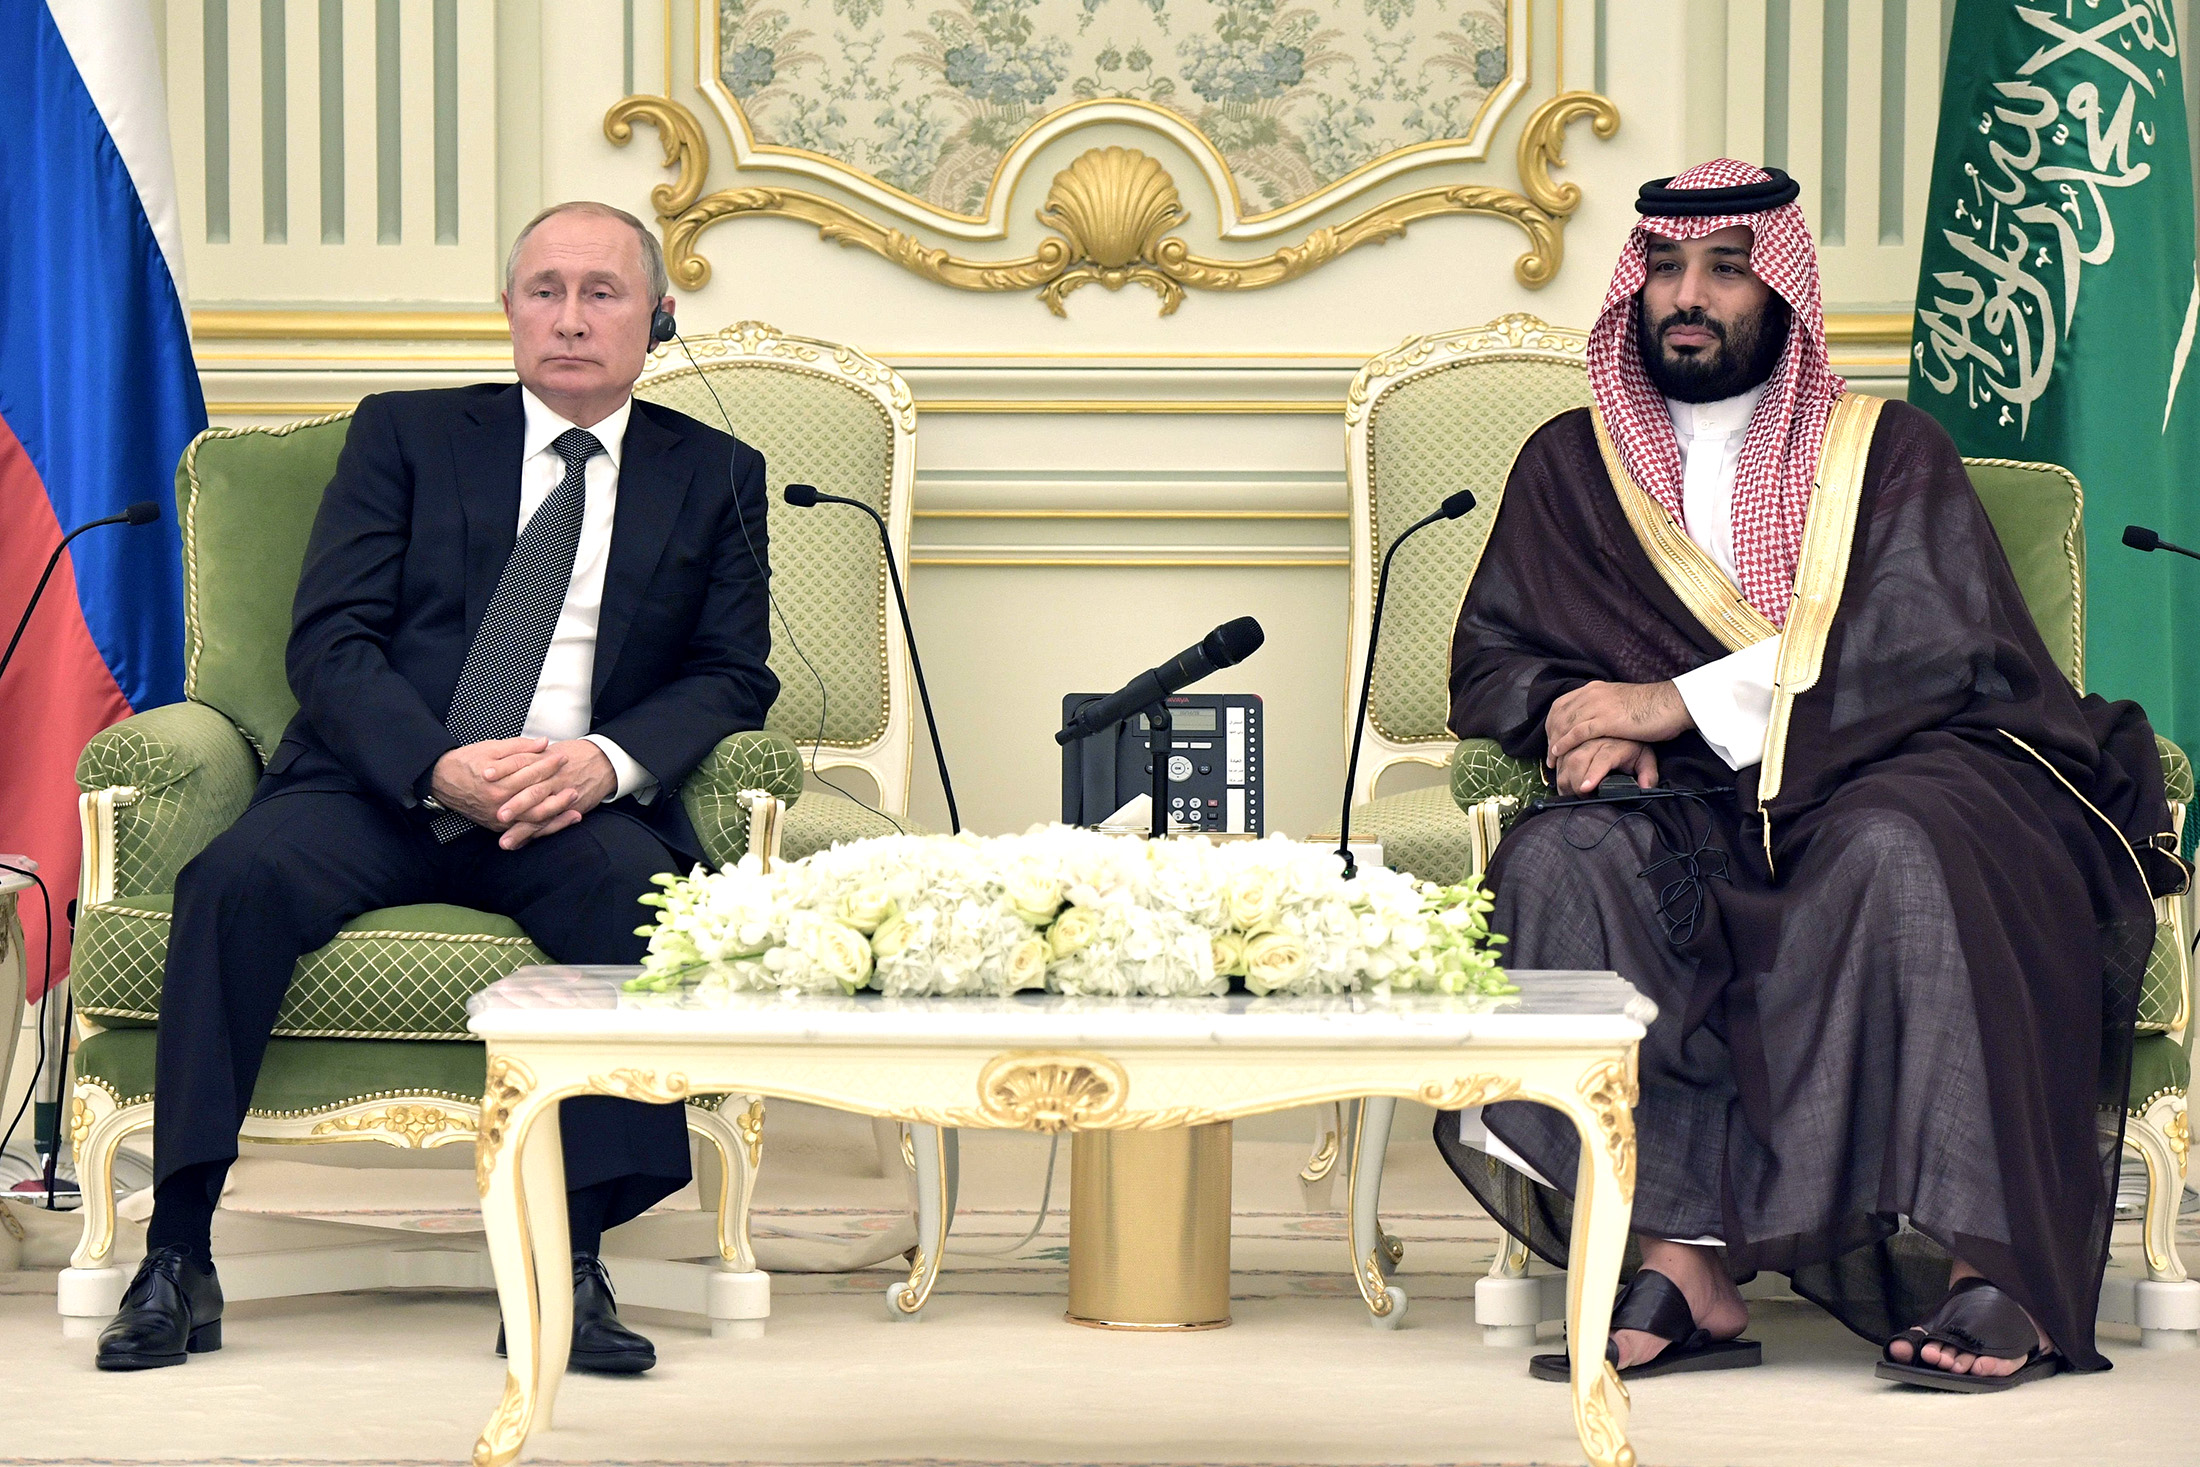 Vladimir Putin meets with Crown Prince Mohammed bin Salman in Riyadh, Saudi Arabia, on Oct. 14, 2019.